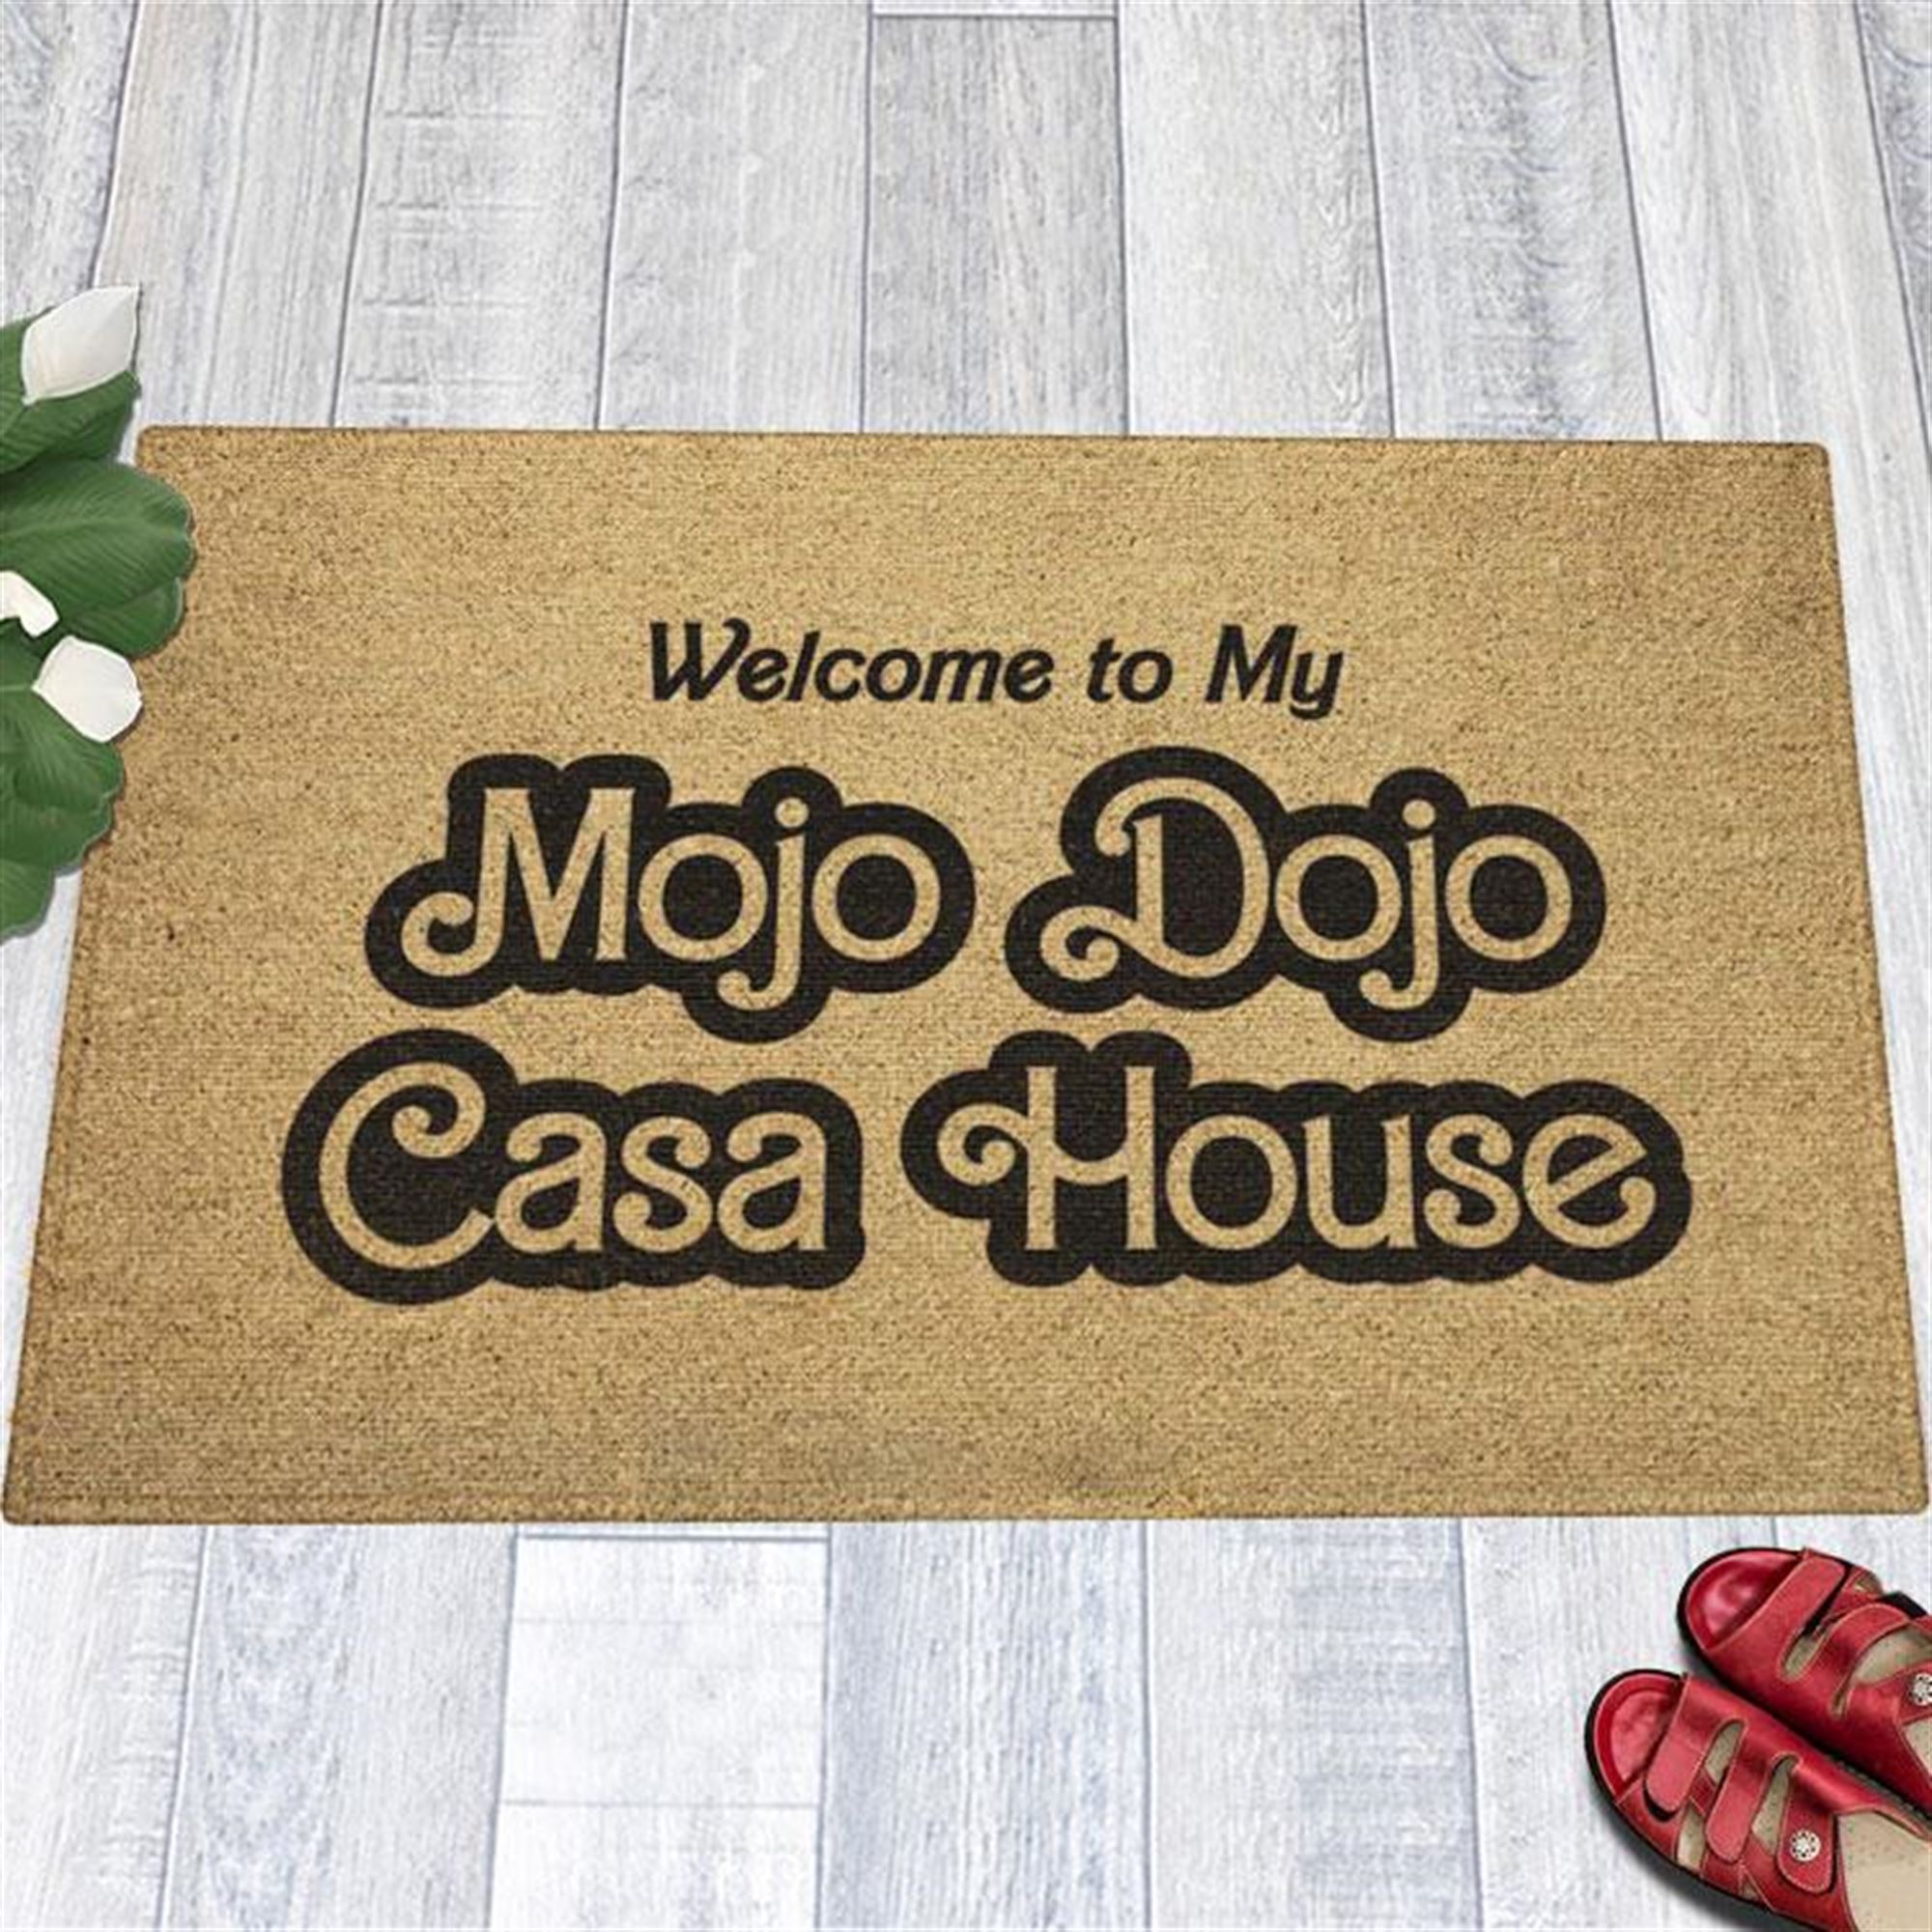 Kenough Welcome To Our Mojo Dojo Casa House Doormat Where Everyone Is Kenough